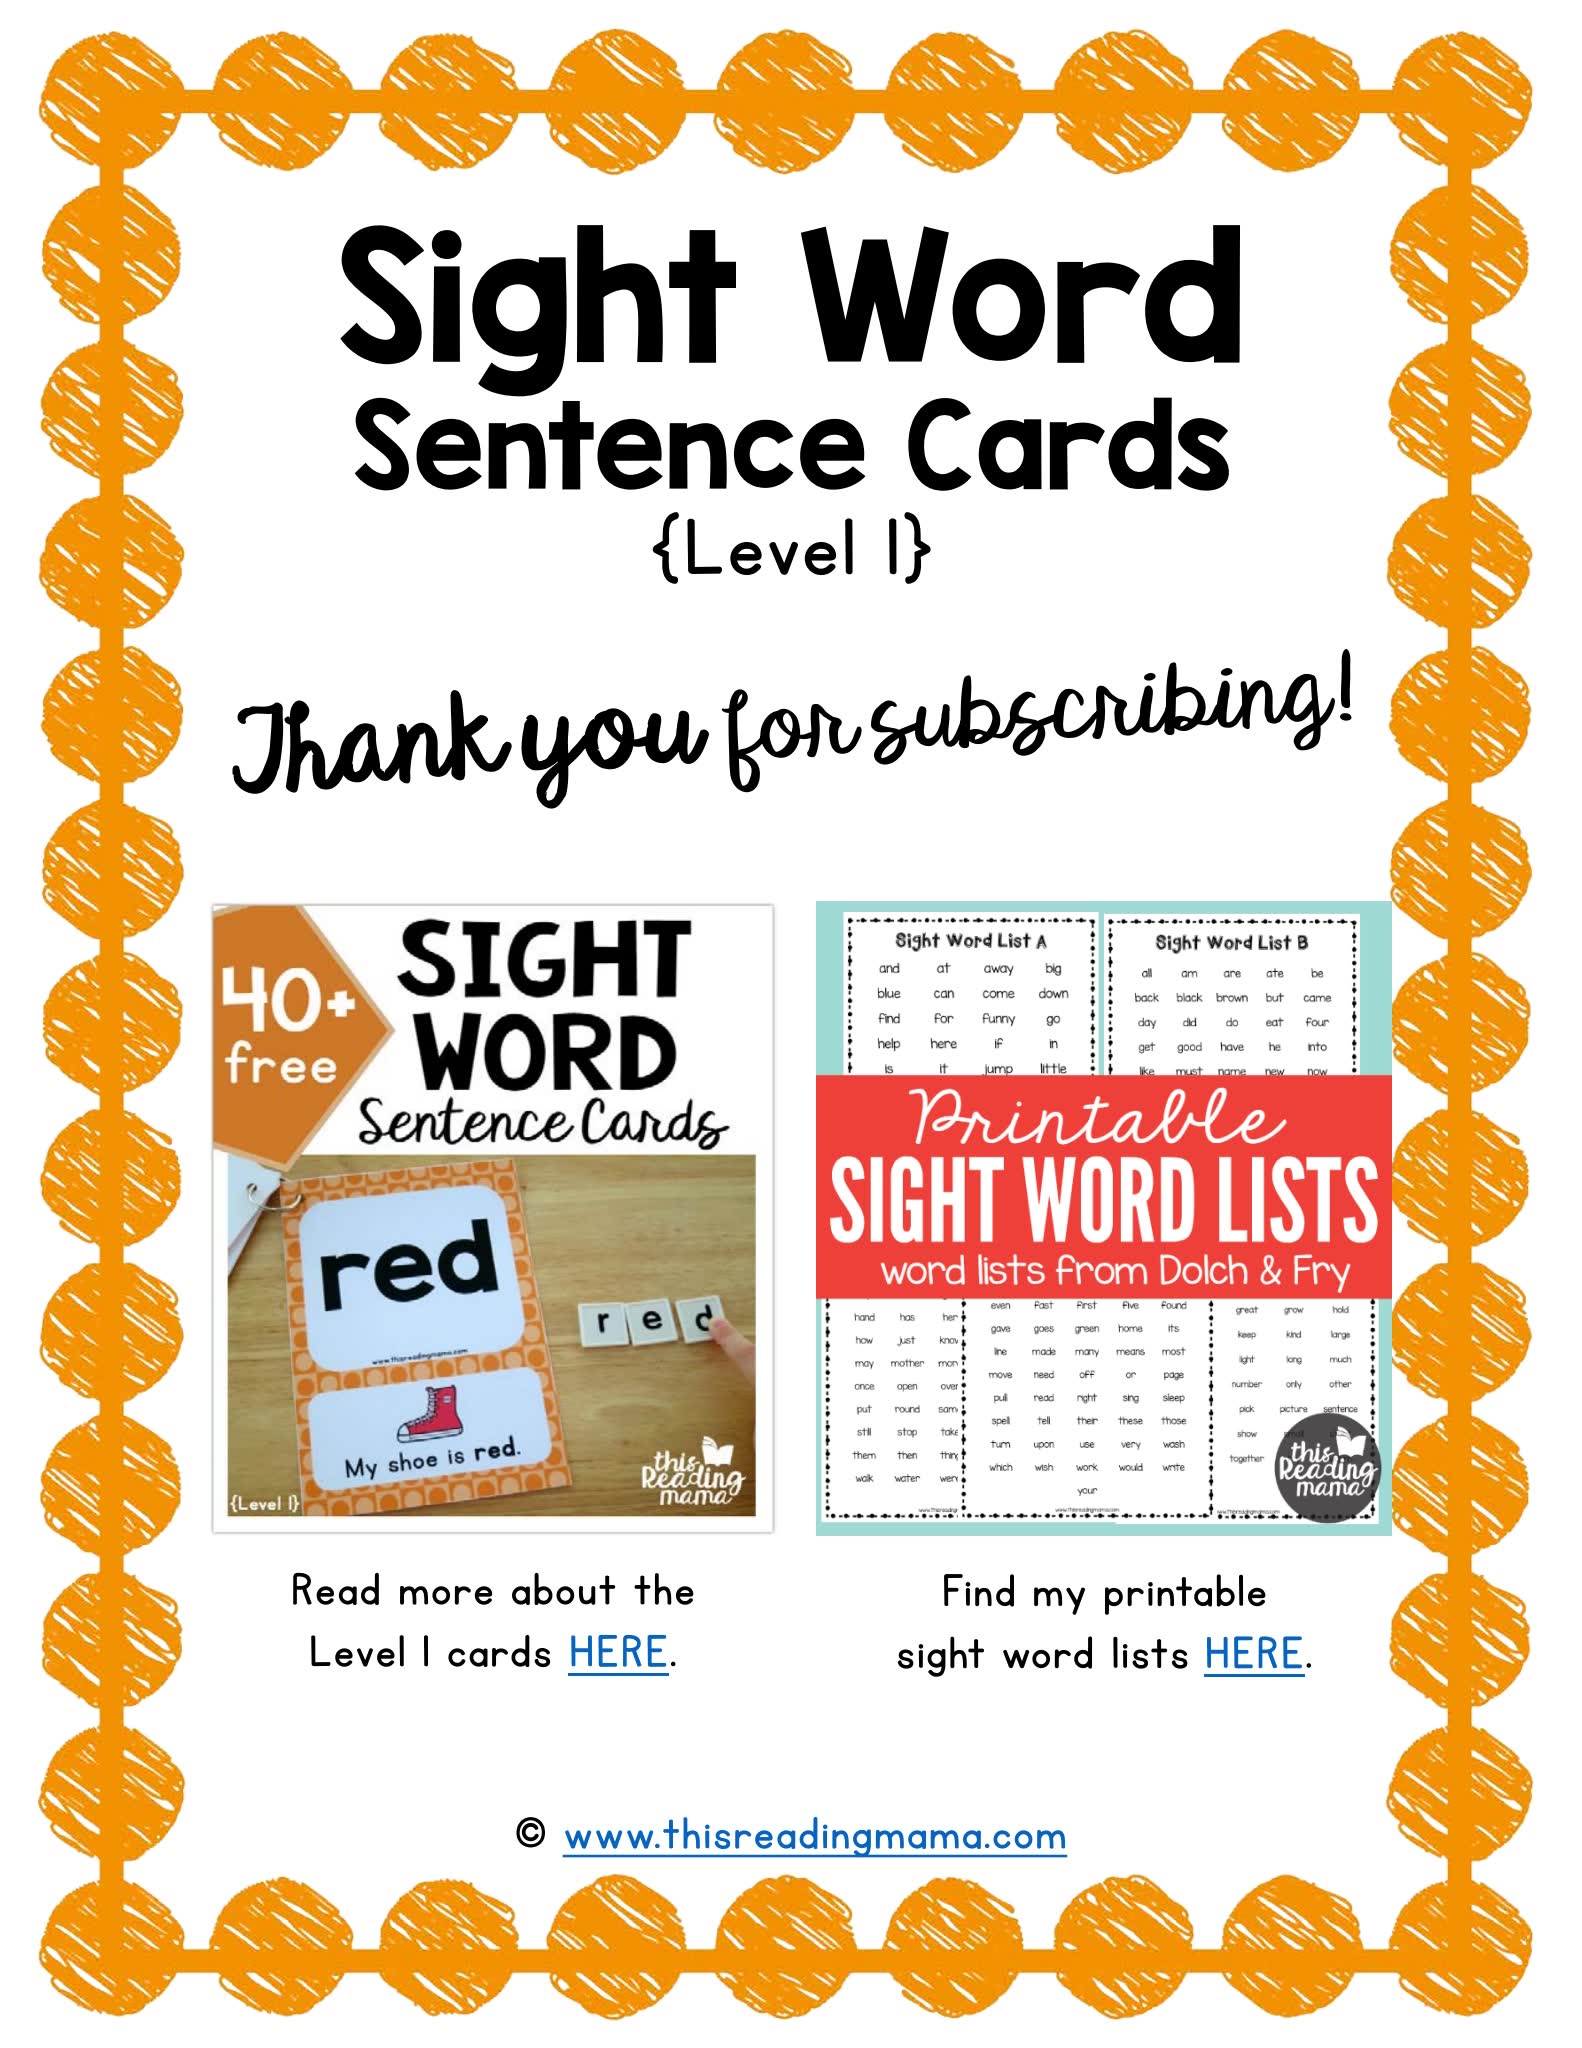 Sight-Word-Sentence-Cards